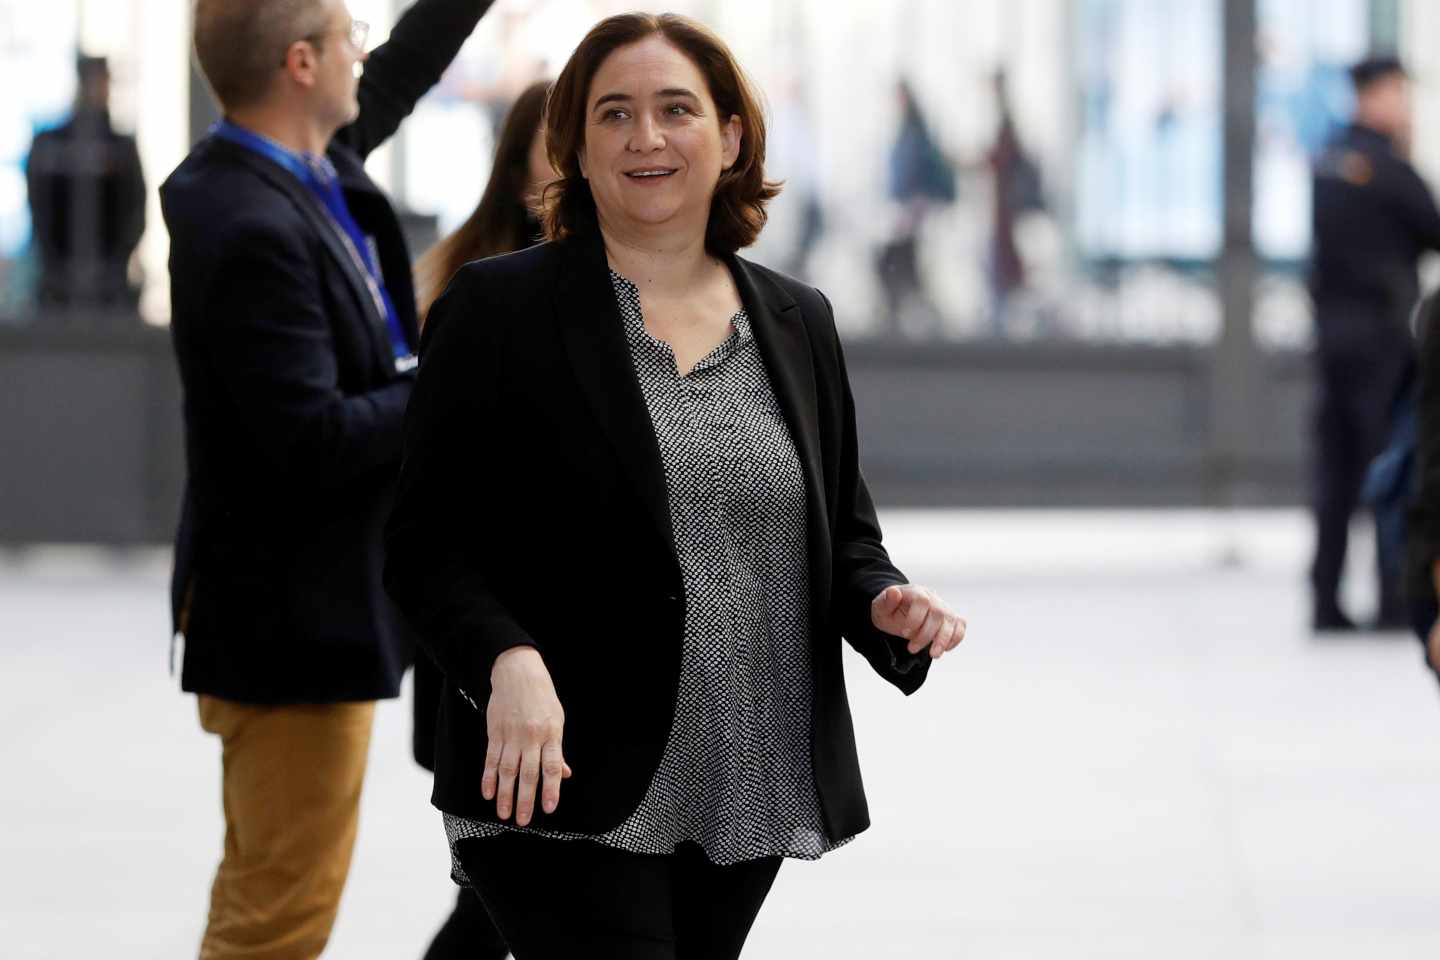 Ada Colau, alcaldesa de Barcelona, llega al Congreso.